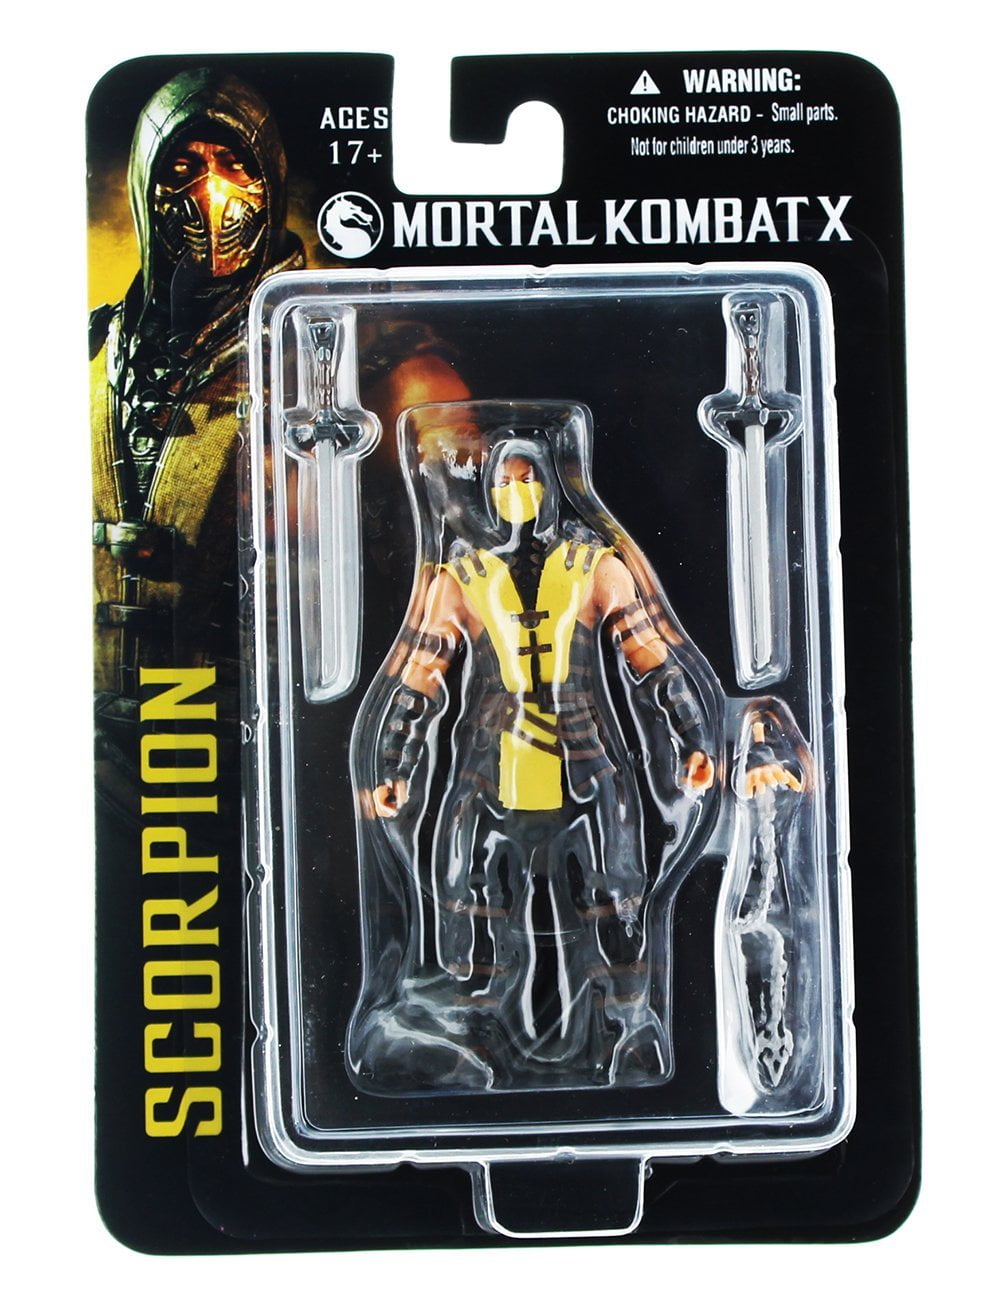 Toyz Mortal Kombat X: Kitana Action Figure, Mezco's 6inch scale 